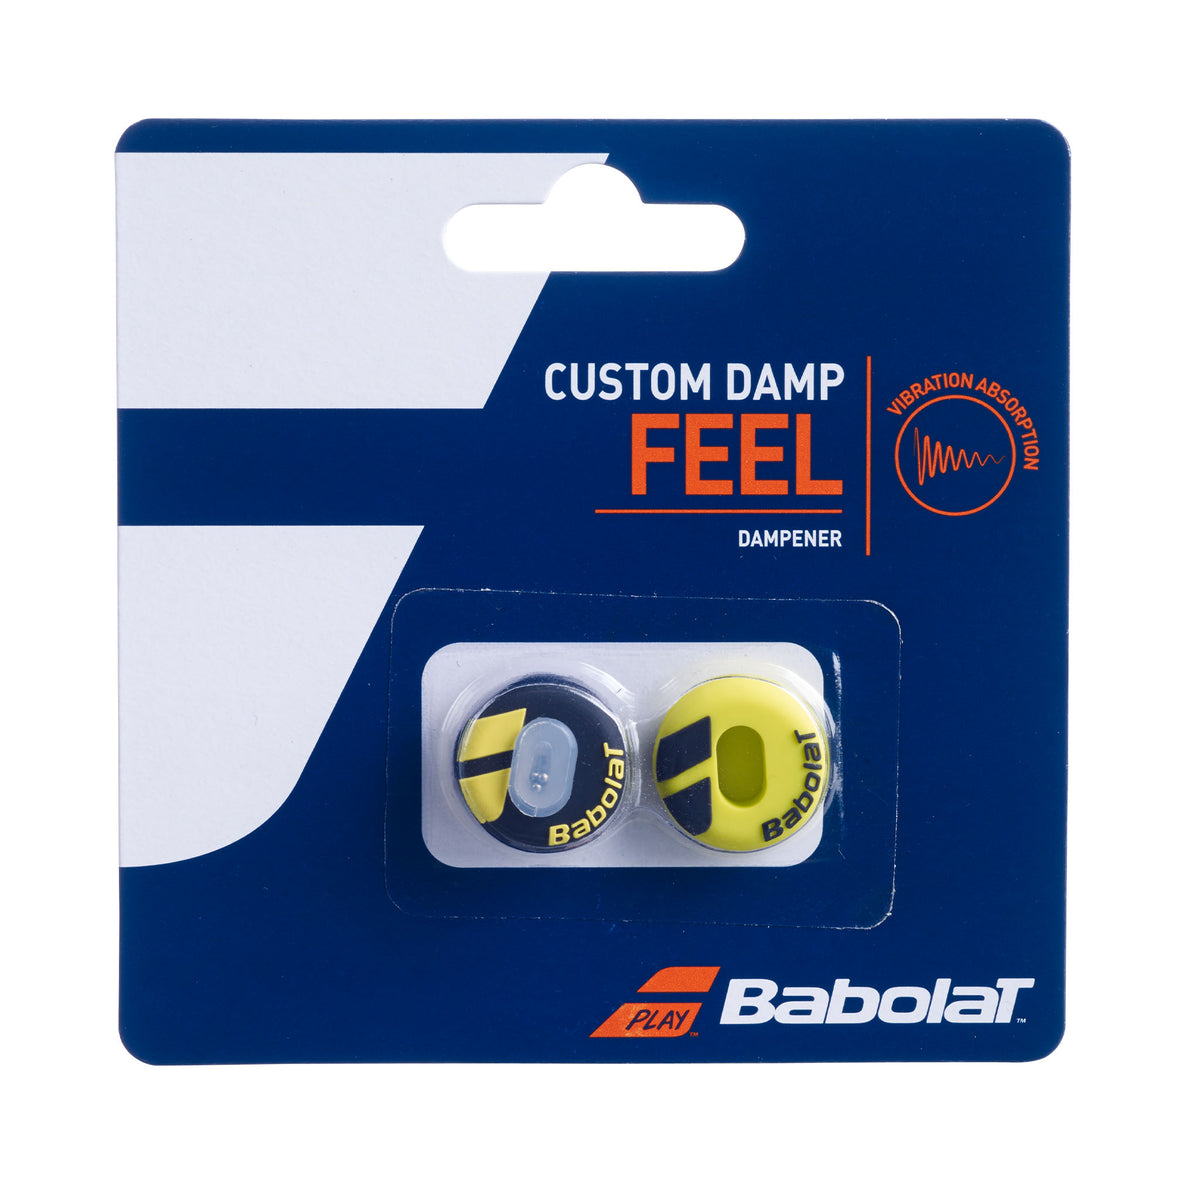 Babolat Custom Damp Dampener x2: Black/Yellow